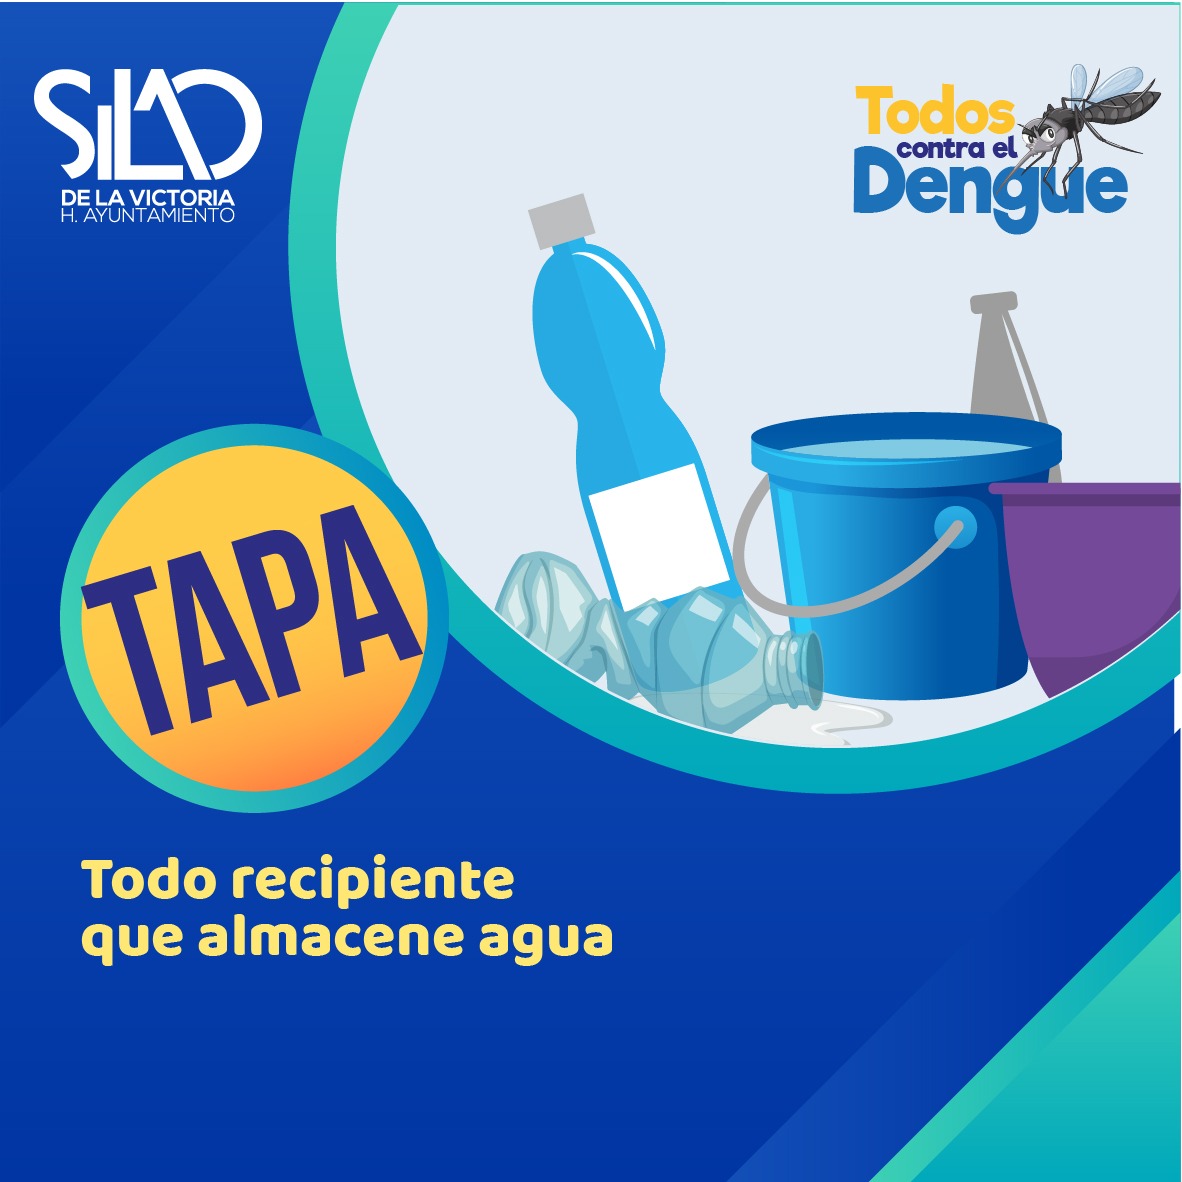 Emiten recomendaciones para prevenir el dengue